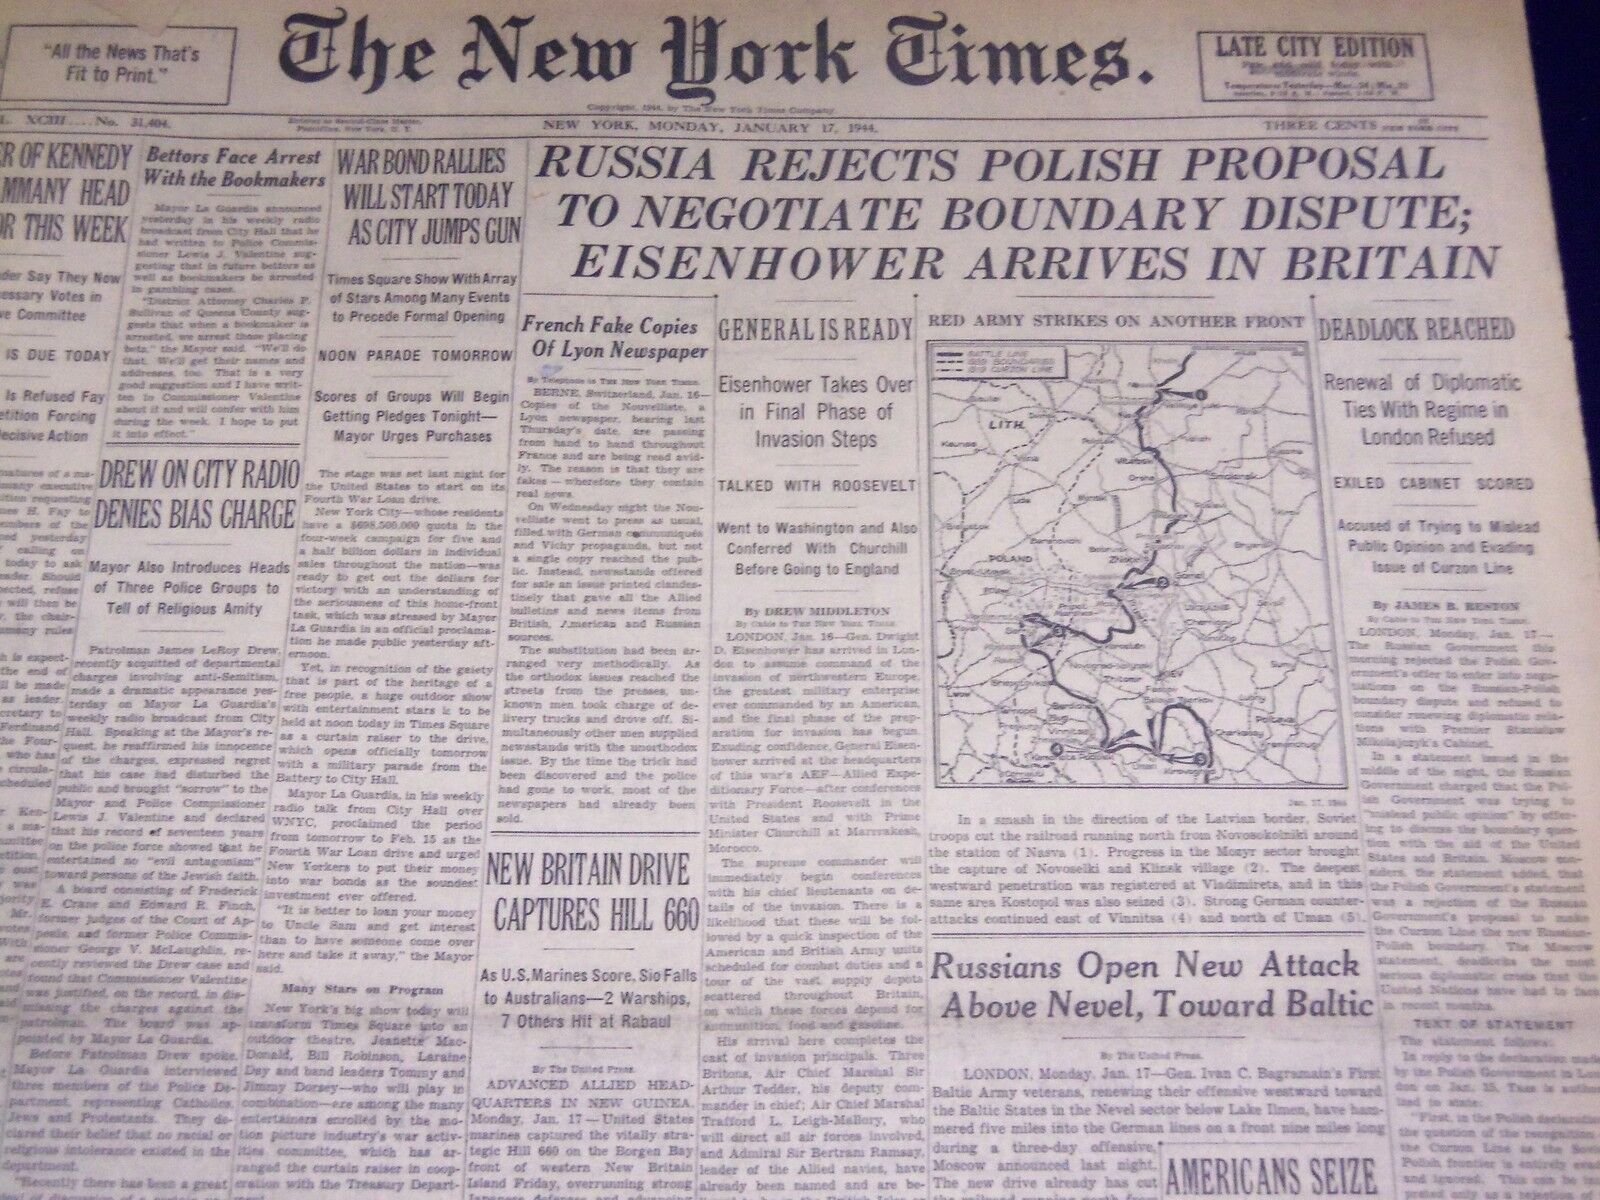 1944 JANUARY 17 NEW YORK TIMES - EISENHOWER ARRIVES IN BRITAIN - NT 1741